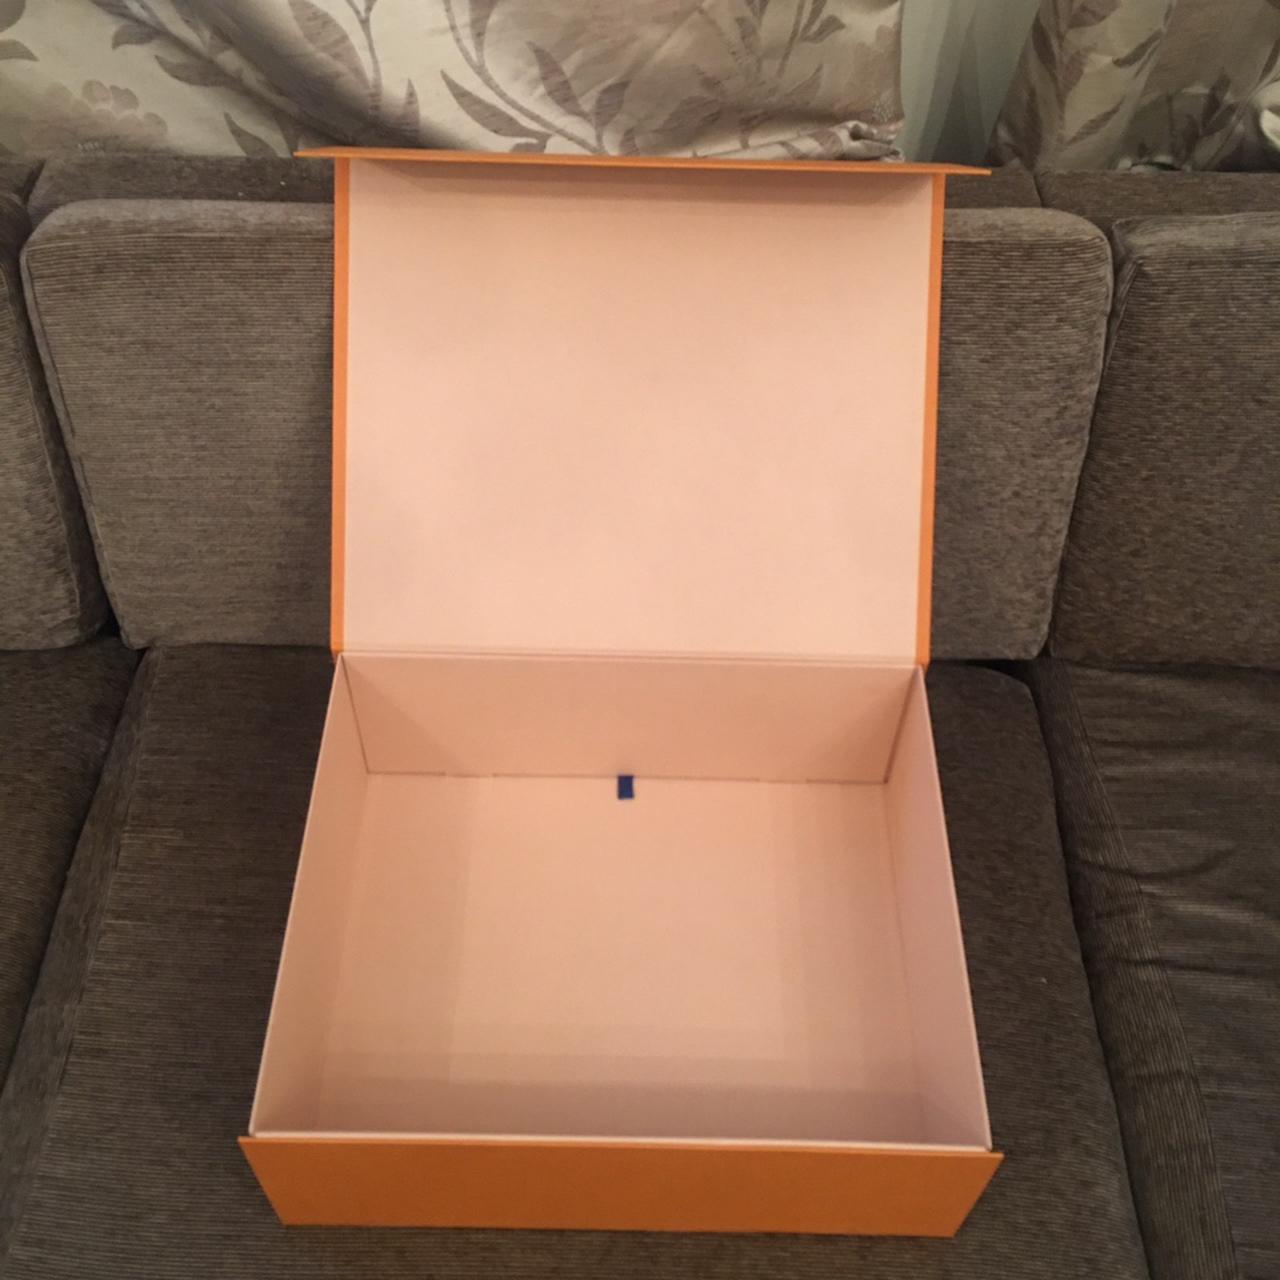 Like new Louis Vuitton medium sized box(empty) 14x10x5 - Depop